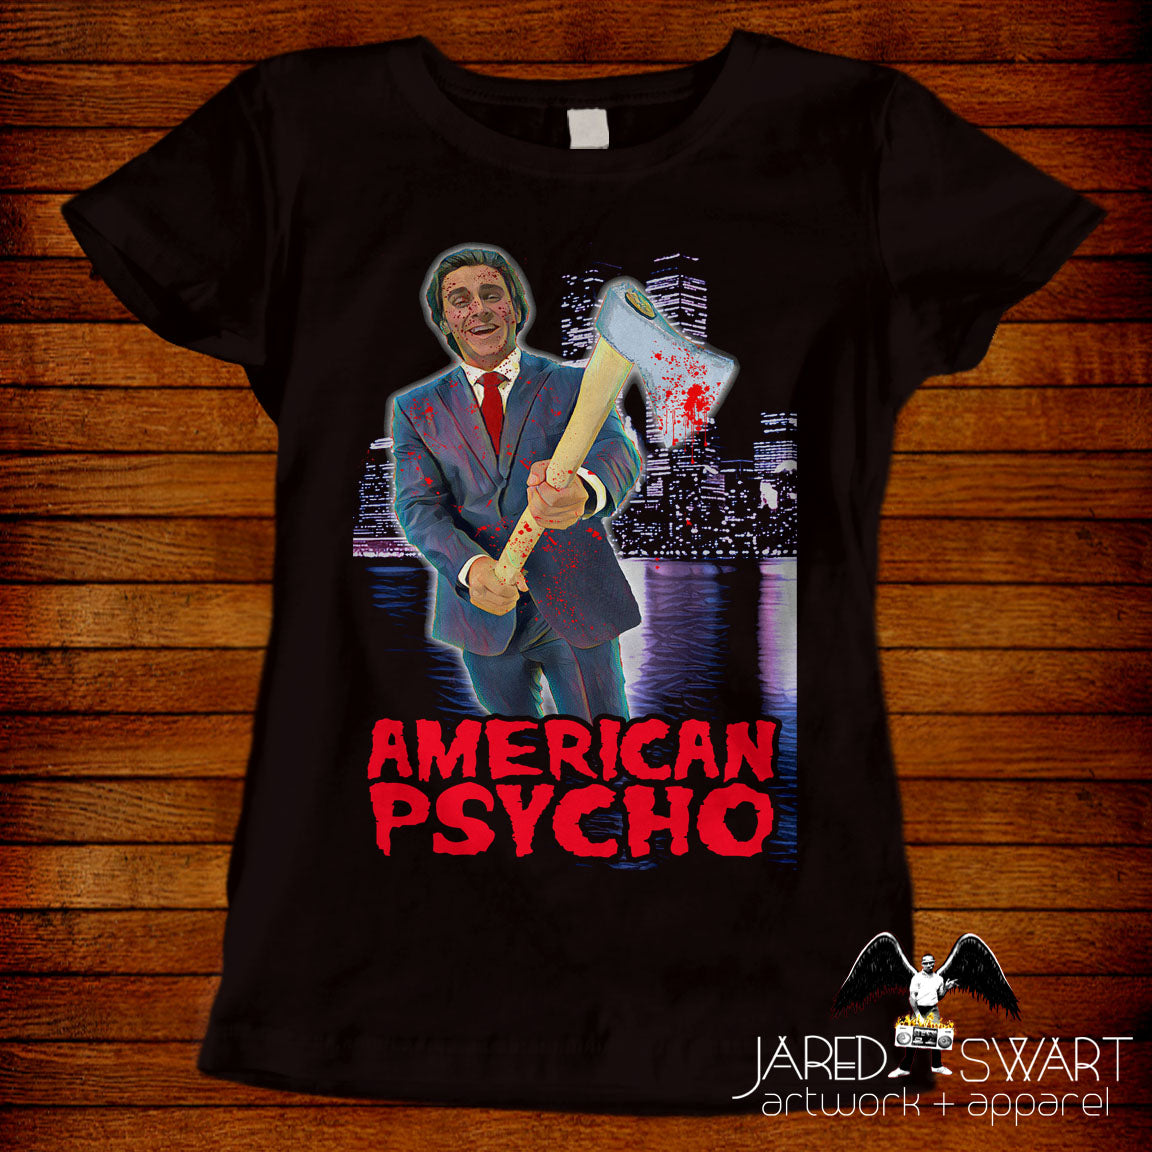 American Psycho T-shirt retro vhs big box style art